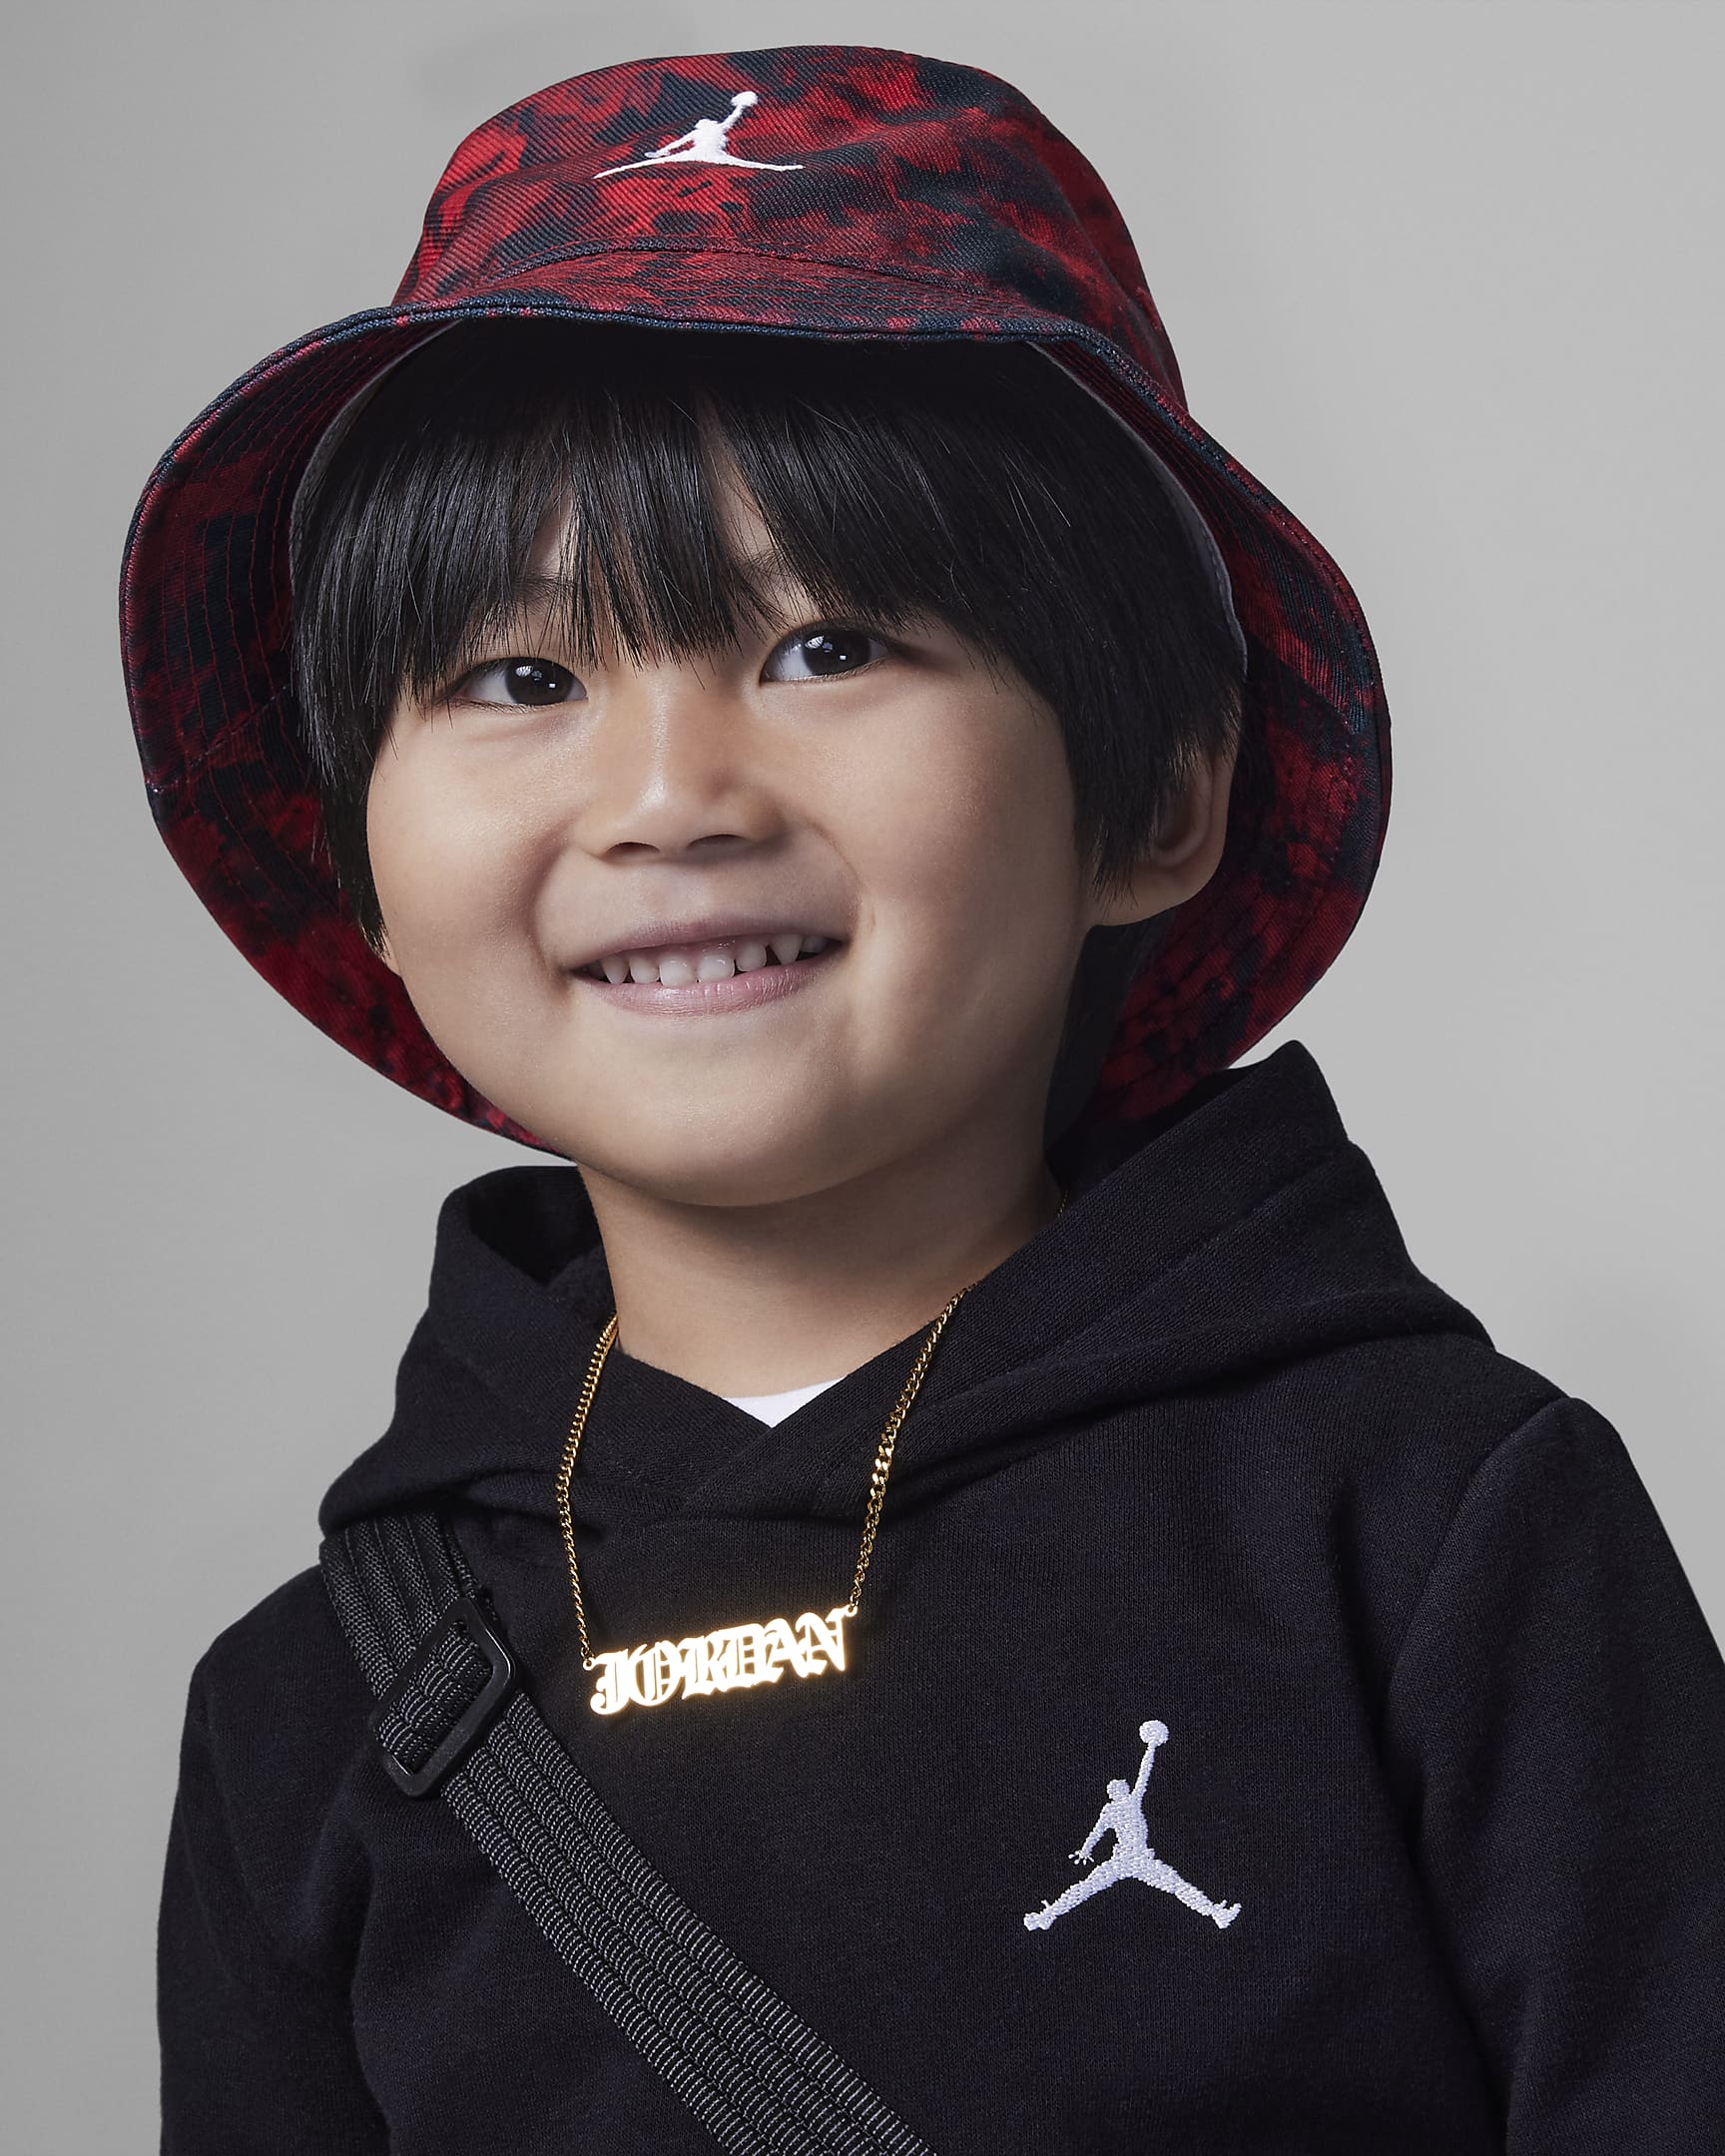 Jordan MJ Essentials Fleece Pullover Set Toddler 2-Piece Hoodie Set ...